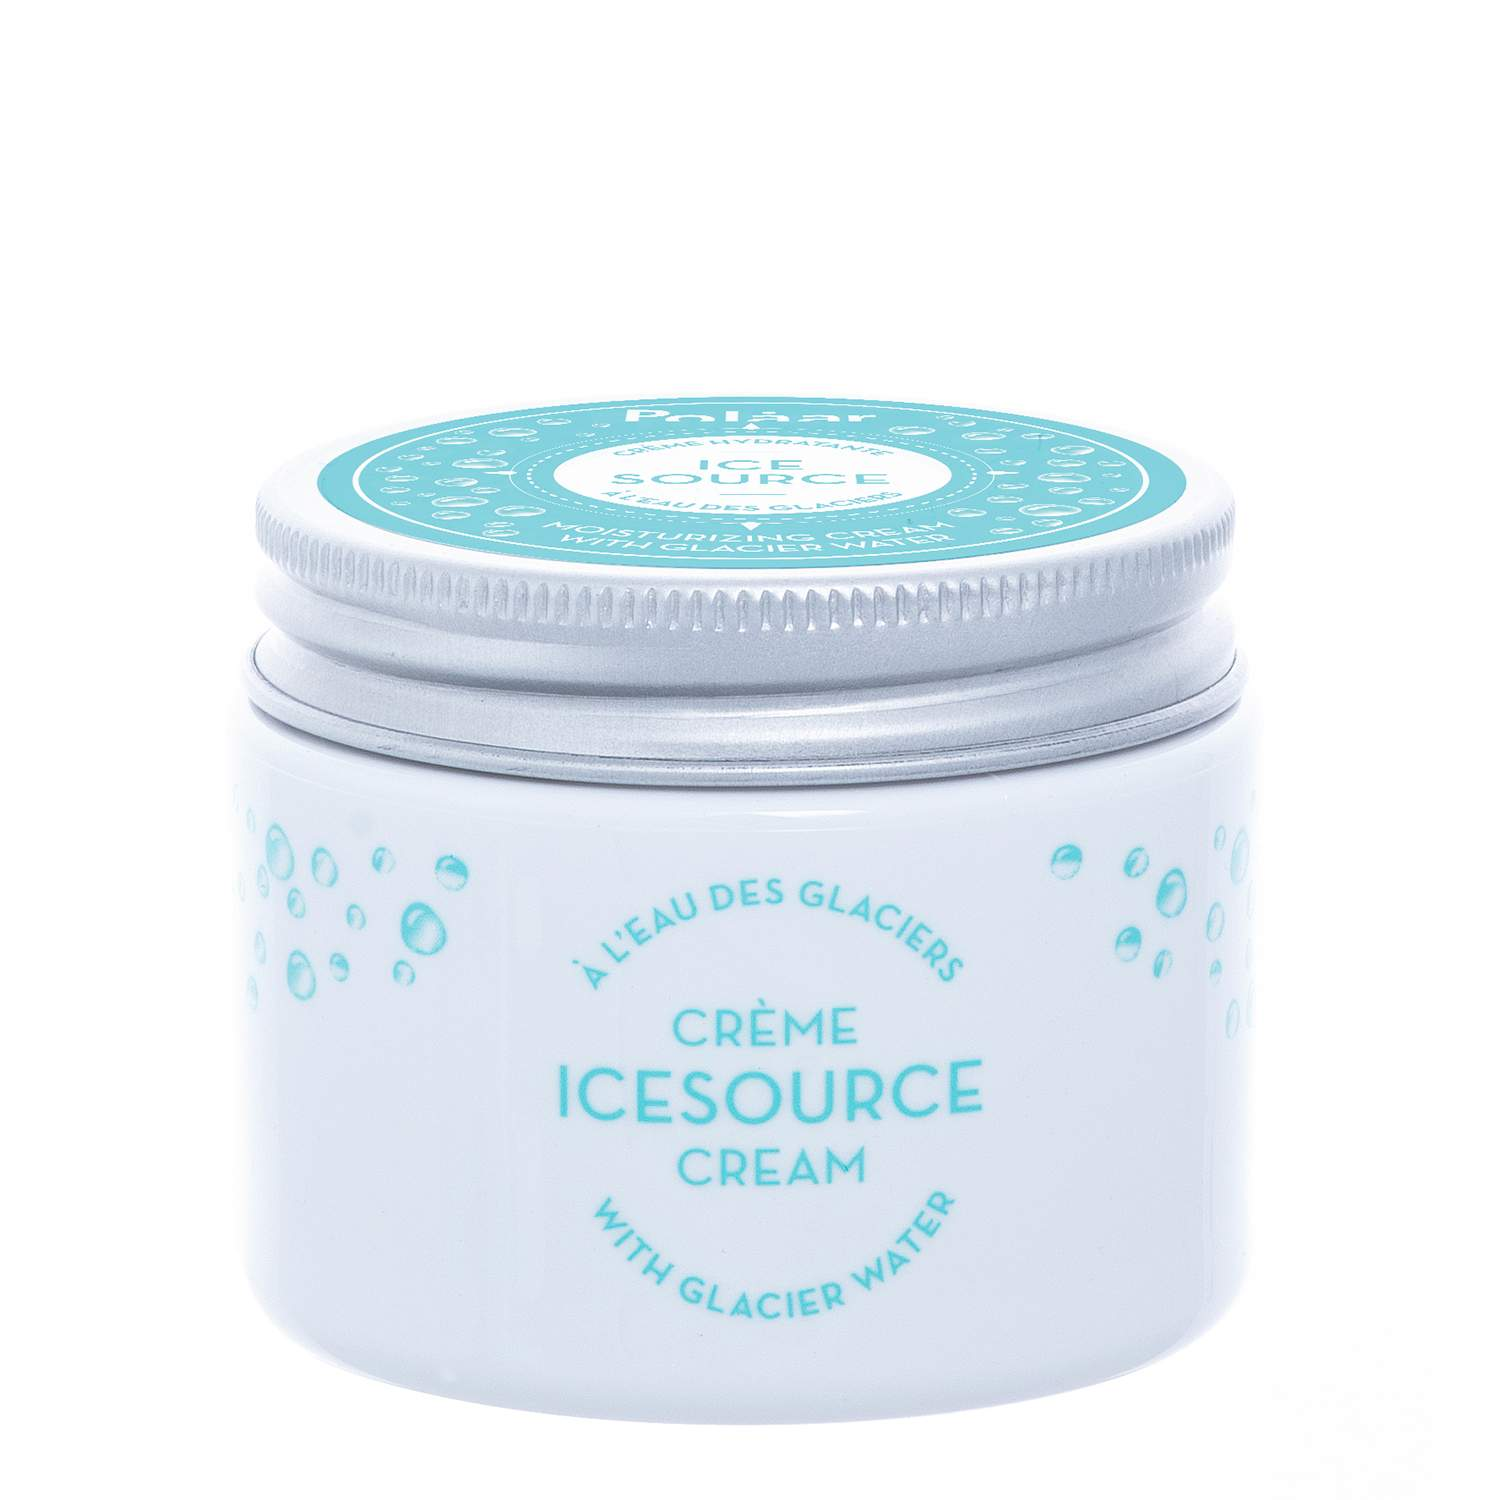 Polaar Icesource Moisturizing Cream with Glacier Water Polaar Icesource Moisturizing Cream with Glacier Water 1